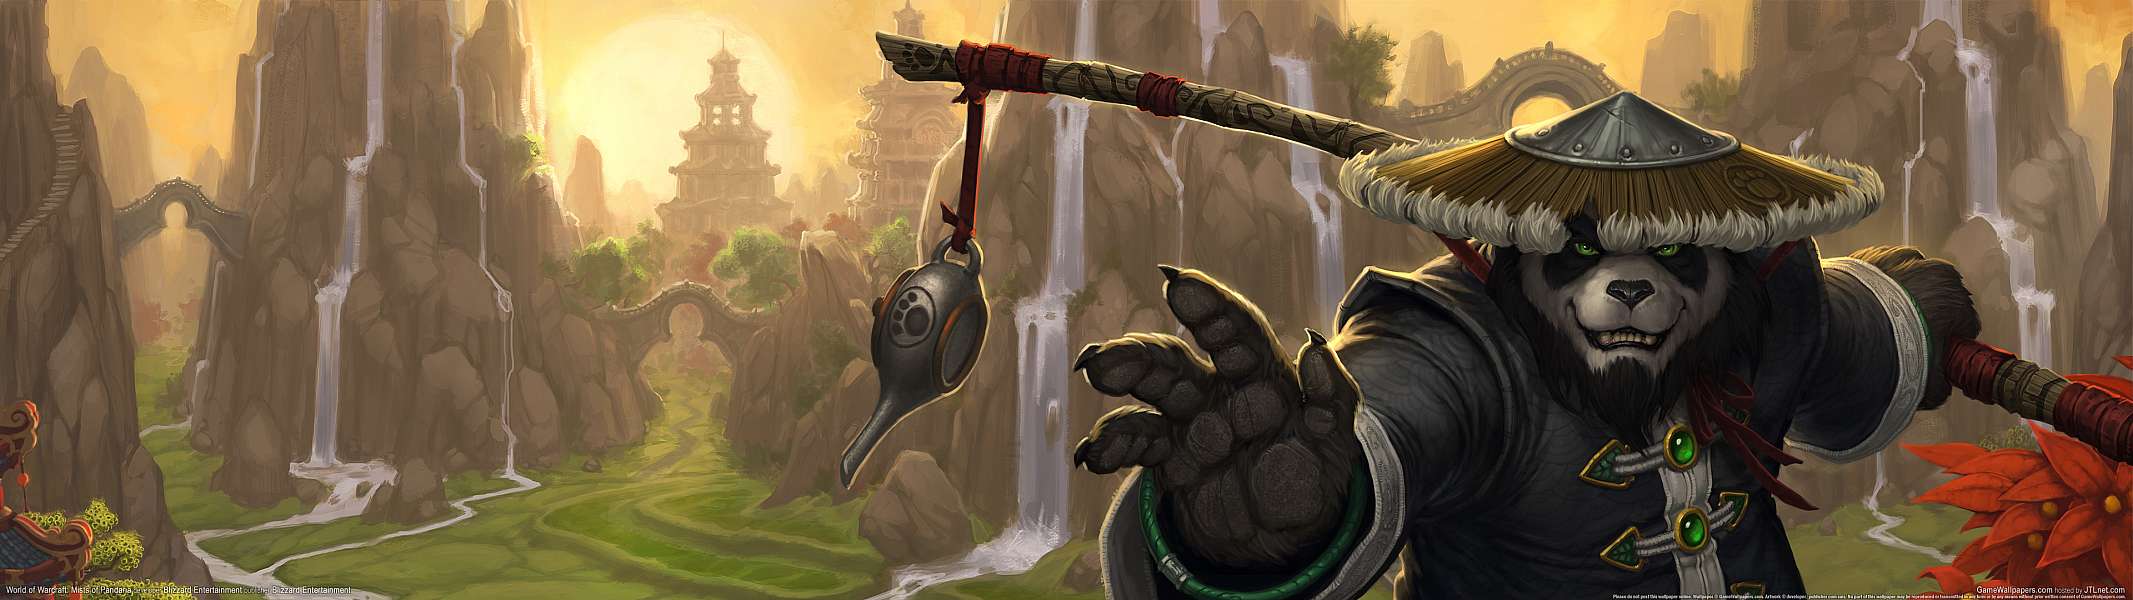 World of Warcraft: Mists of Pandaria dual screen fond d'écran